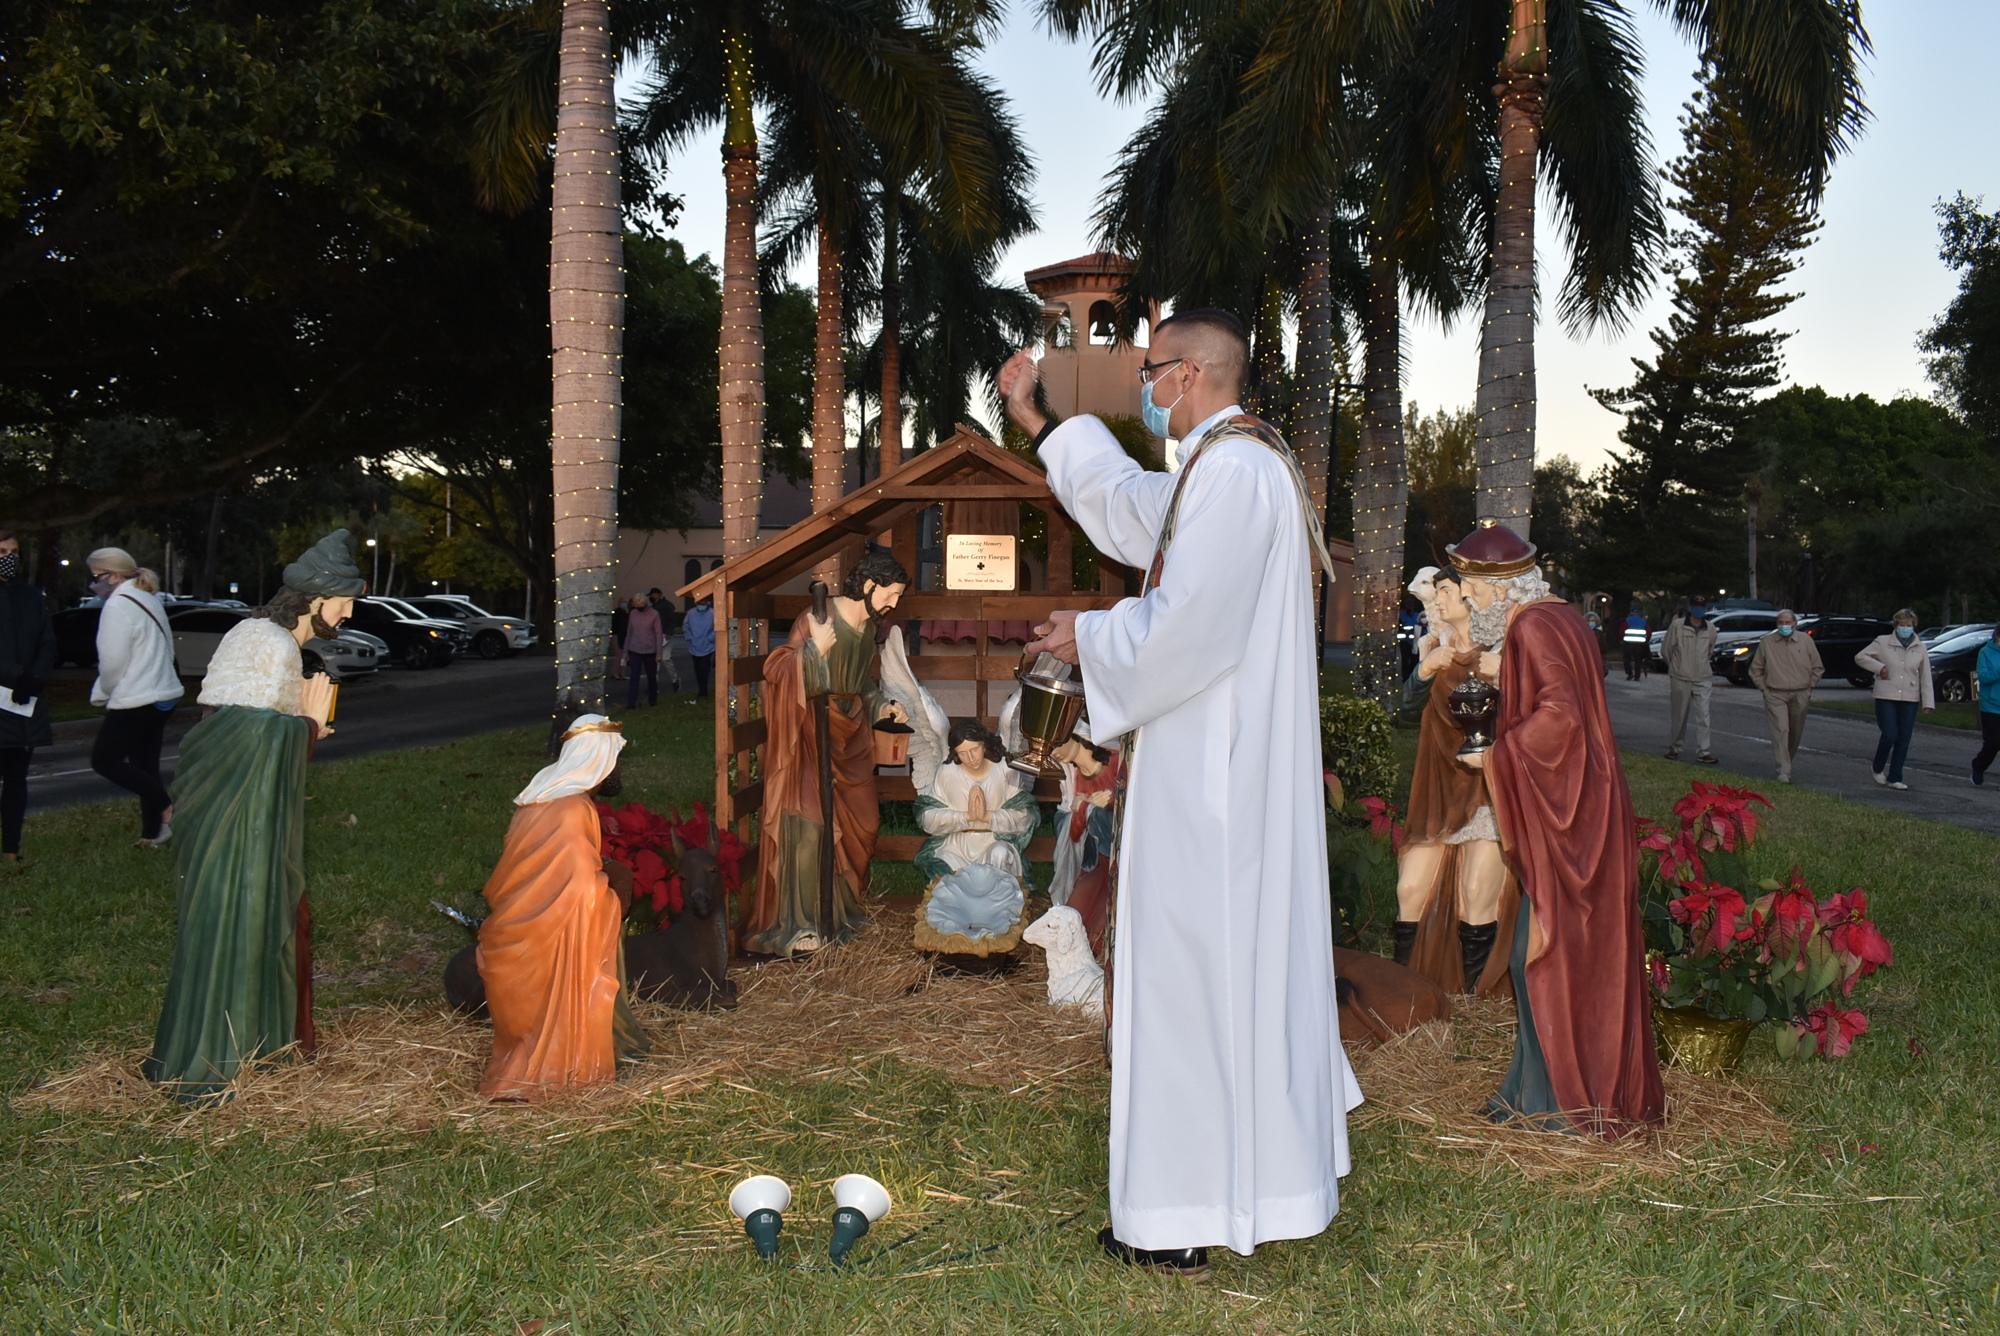 Father Robert Dziedziak blesses the new nativity scene on Dec. 8. The scene was dedicated to his late predecessor, Monsignor Gerry Finegan.